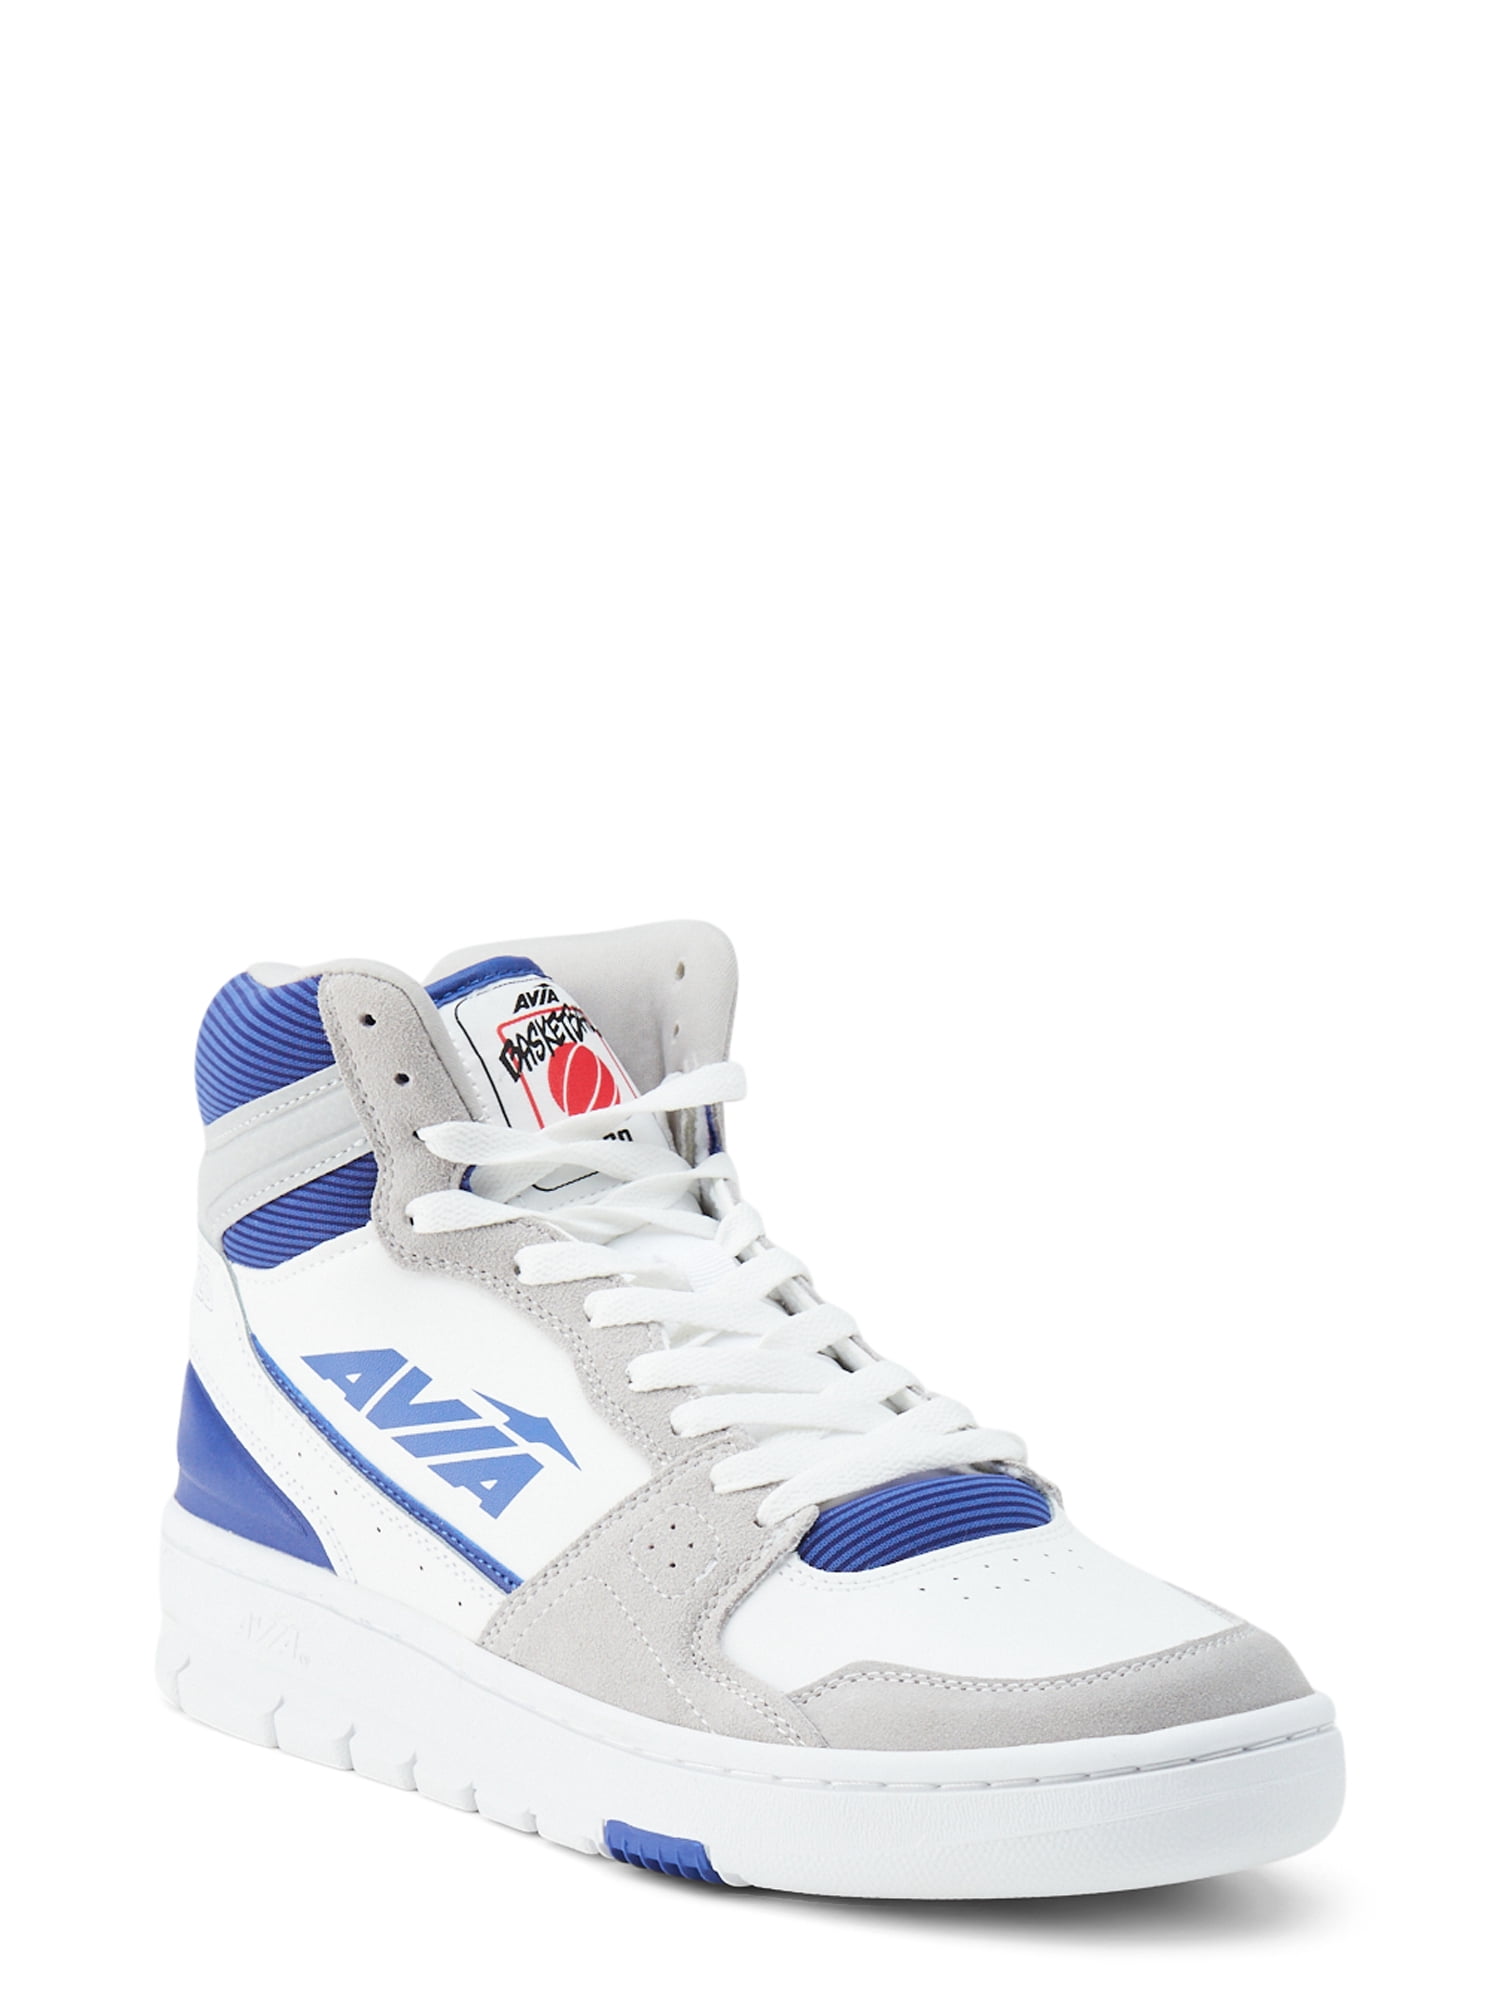 Avia Men’s High-Top Retro Athletic Sneakers, Sizes 7-13 - Walmart.com